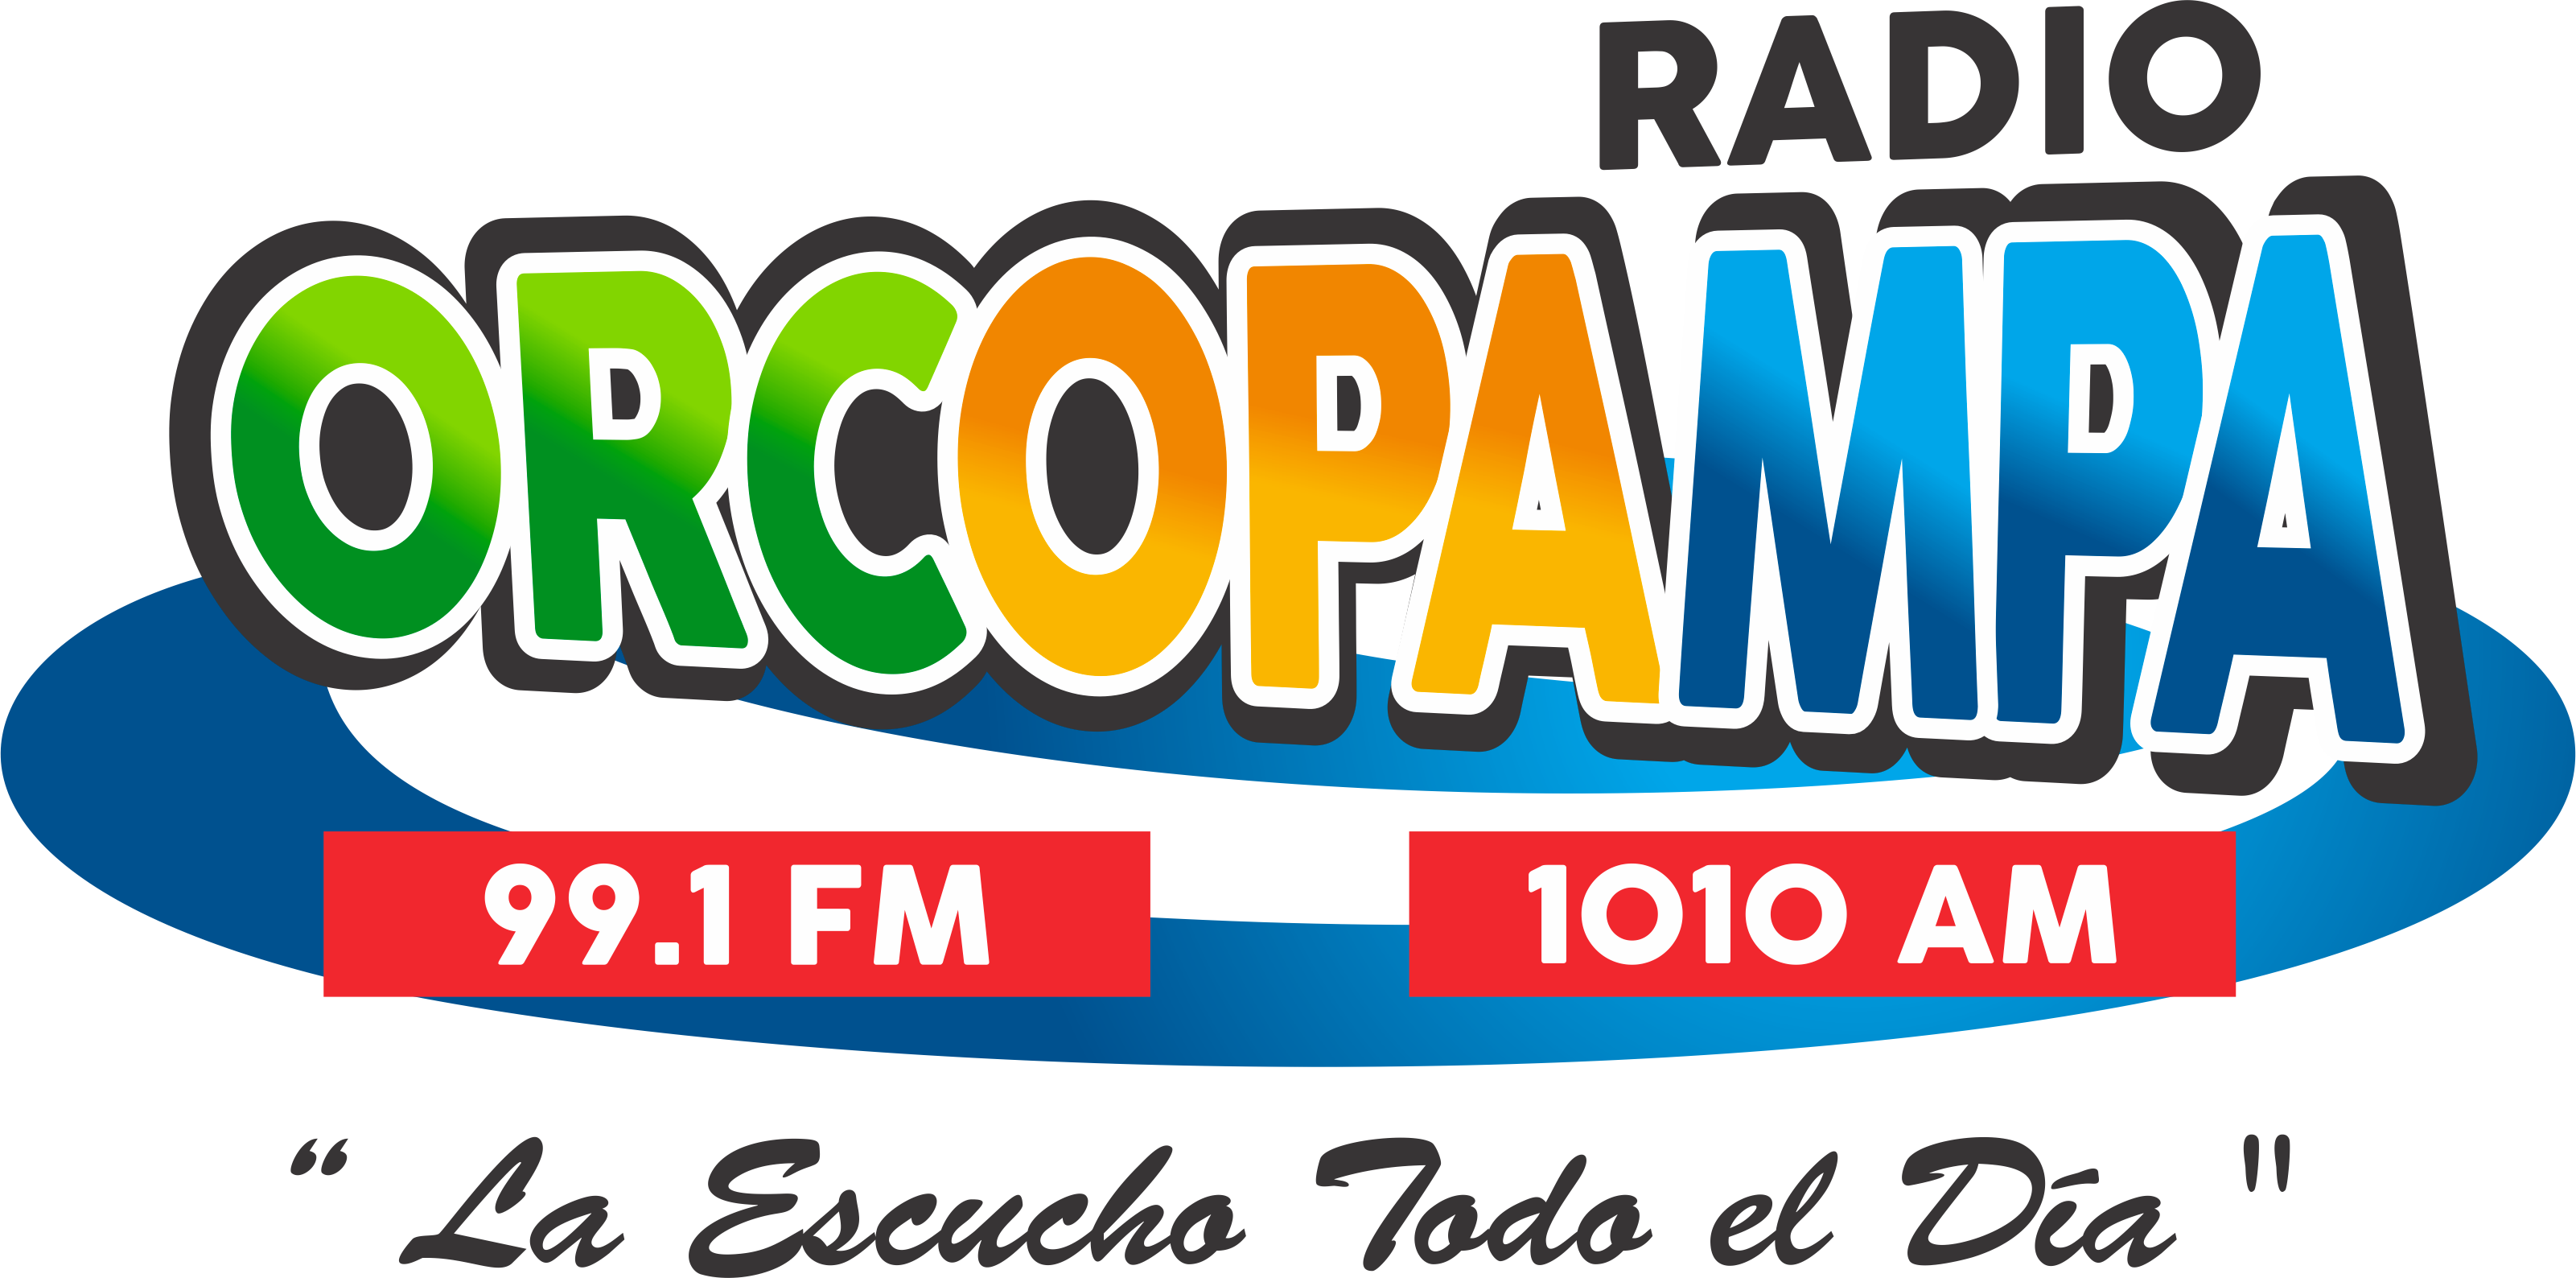 Radio-Orcopampa-logo